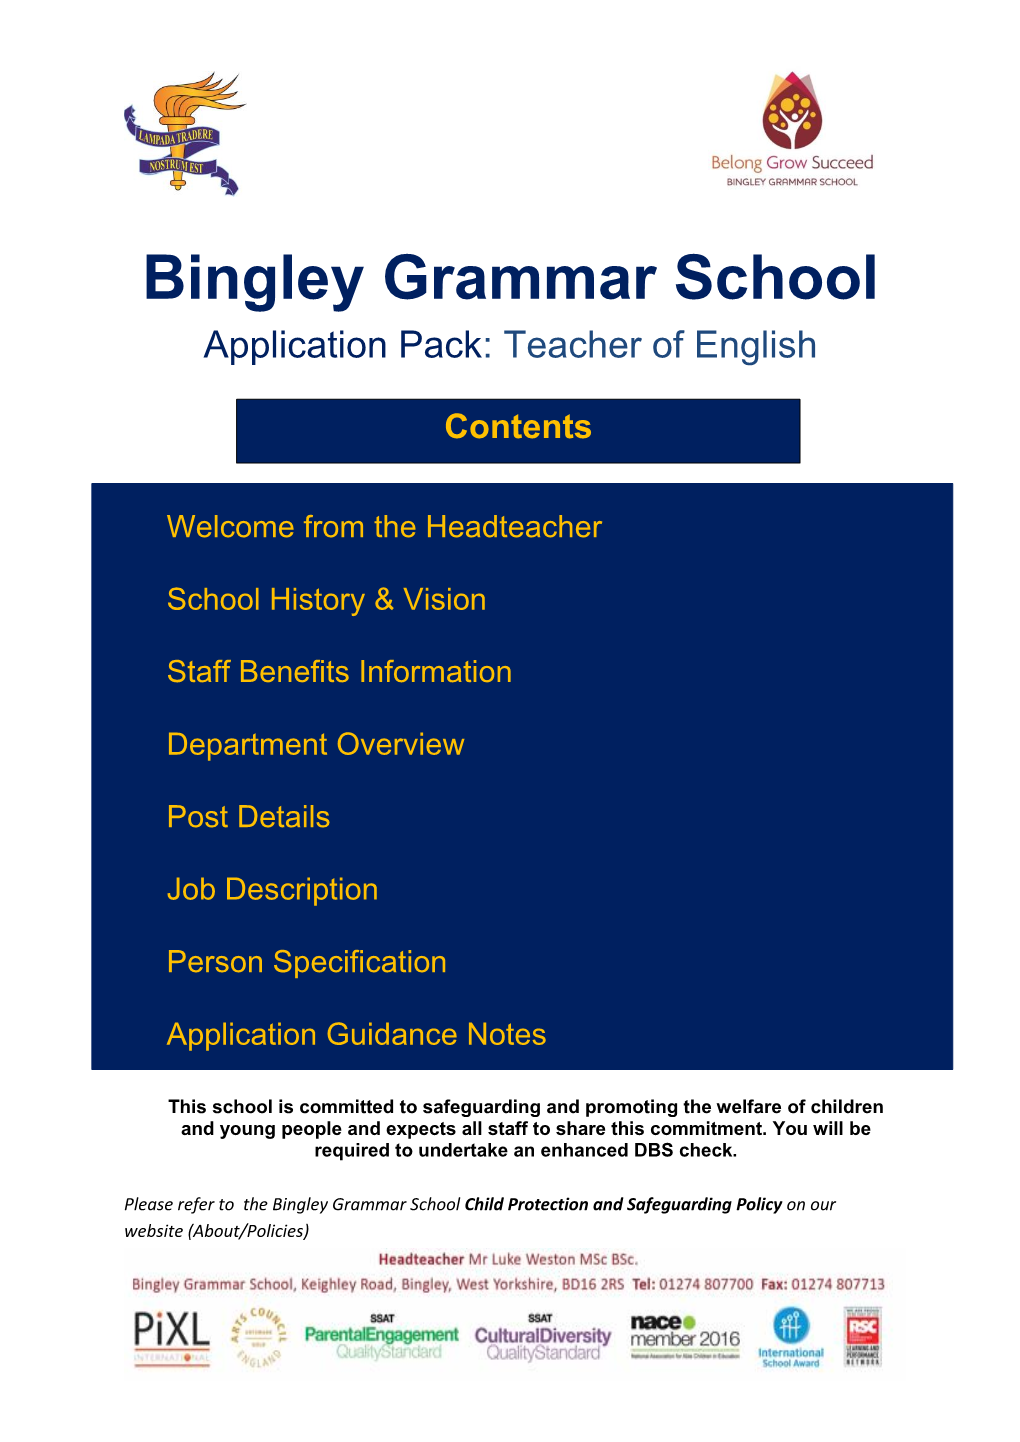 Bingley Grammar School Application Pack: Teacher of English